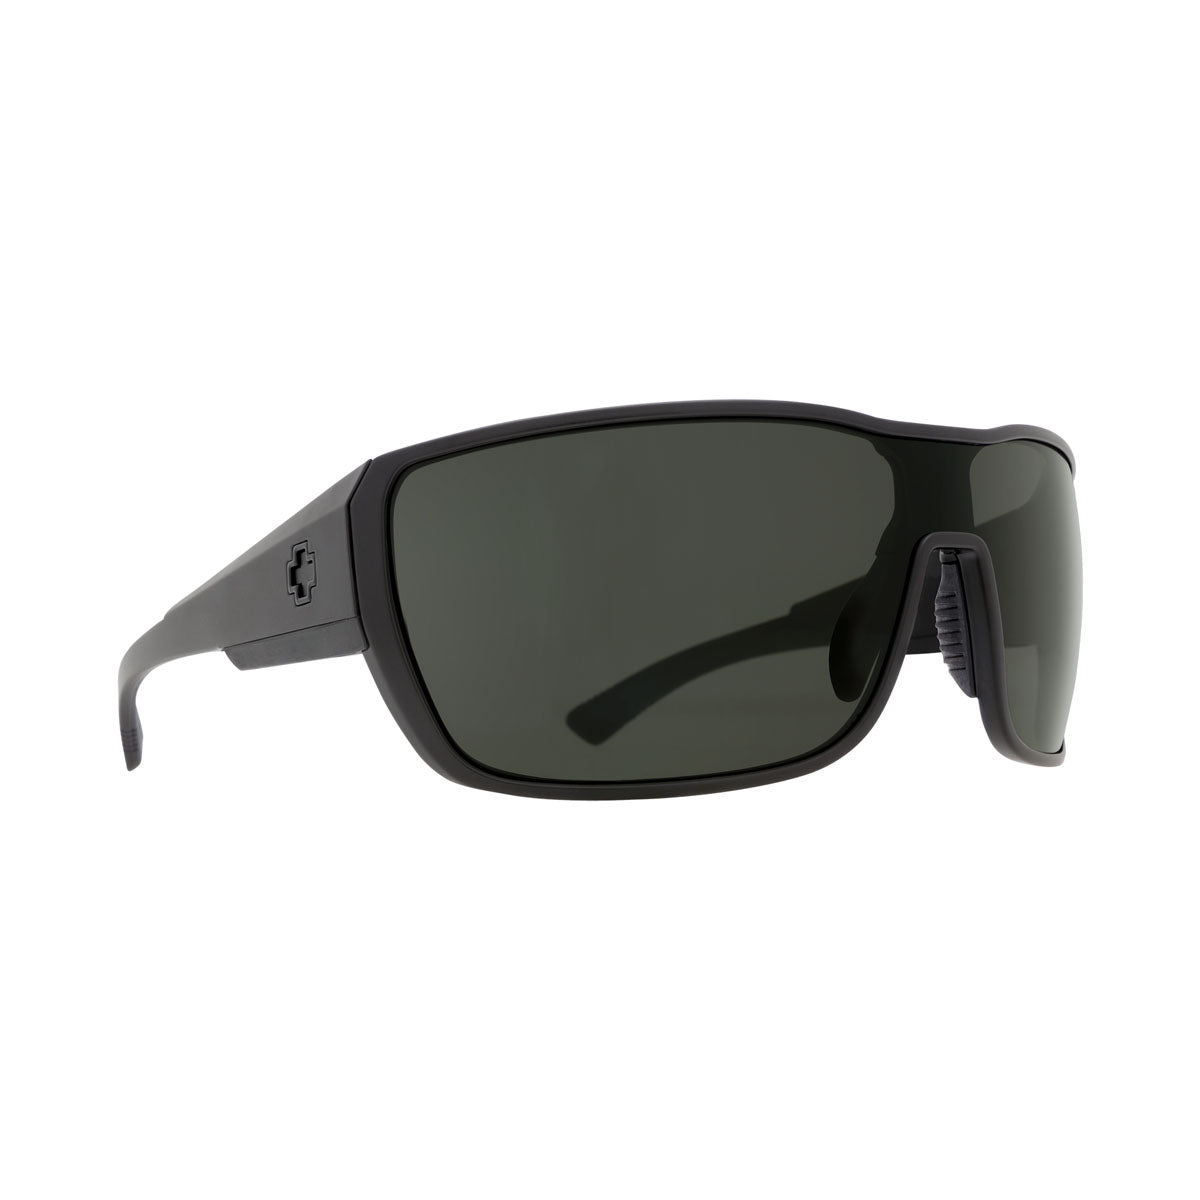 Spy Tron 2 Sunglasses